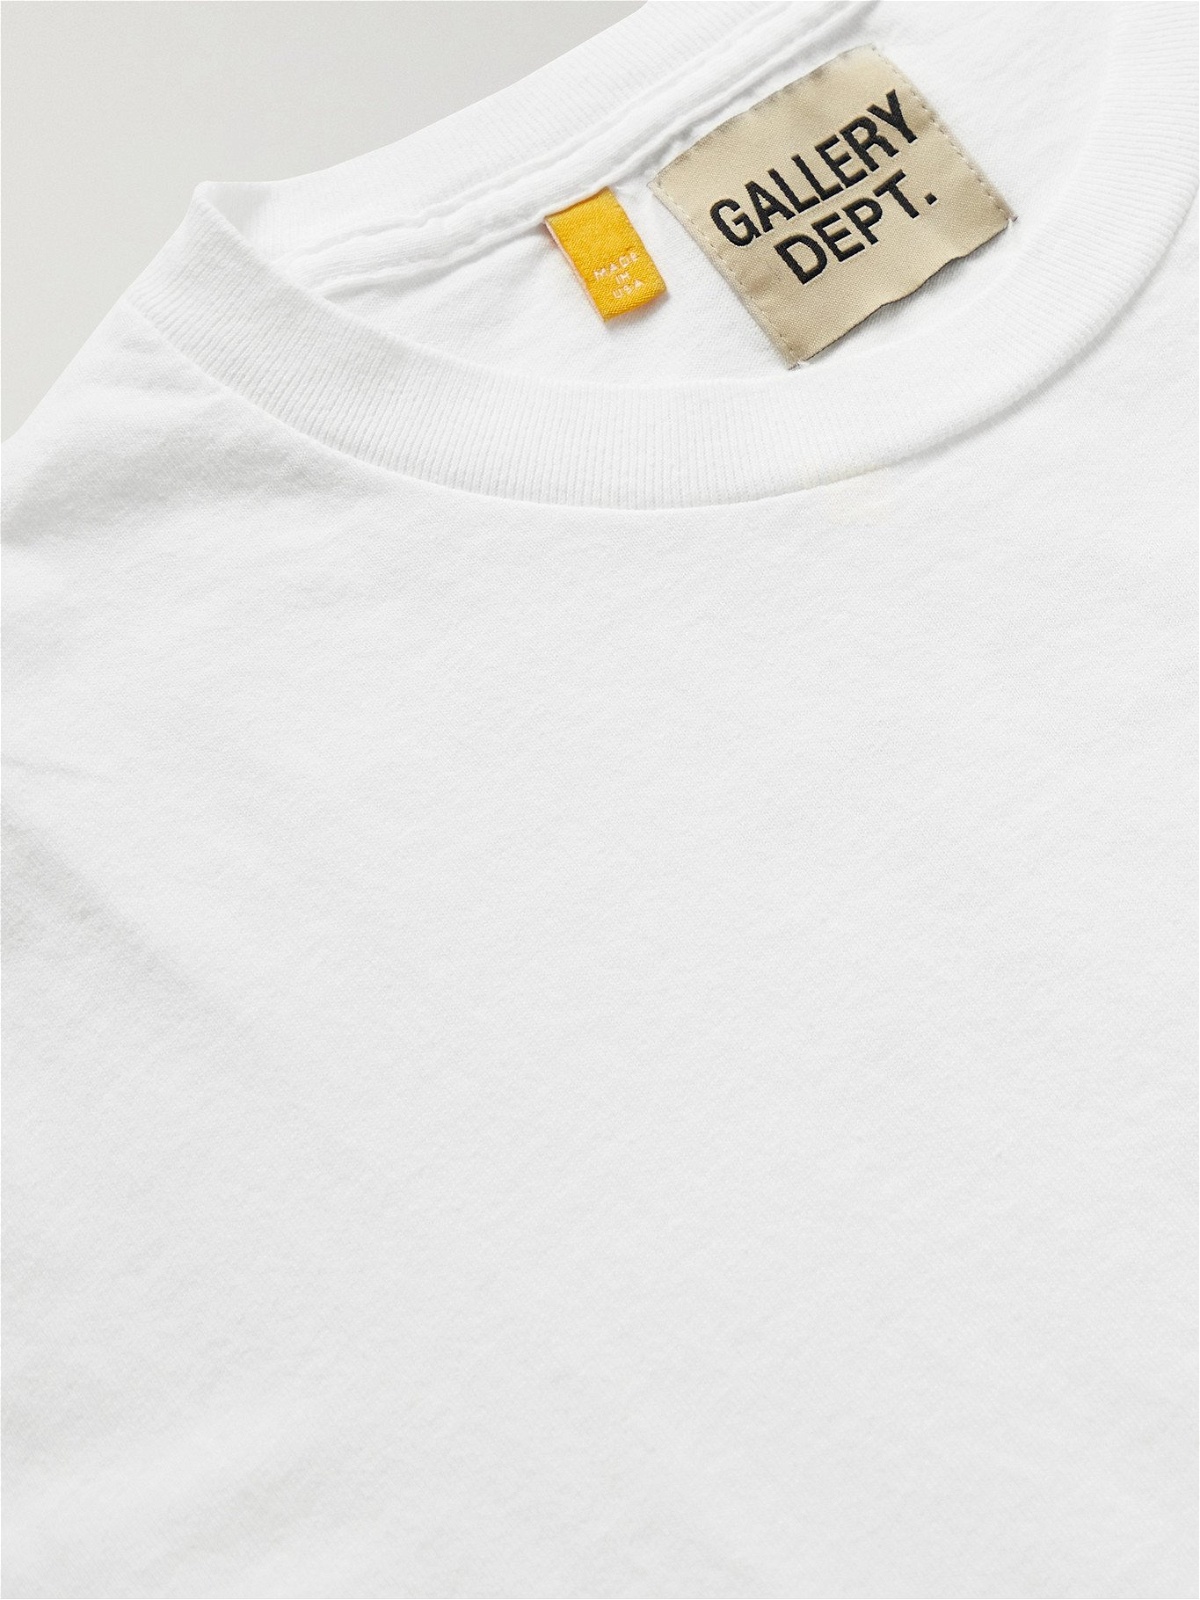 GALLERY DEPT. - French Logo-Print Cotton-Jersey T-Shirt - White